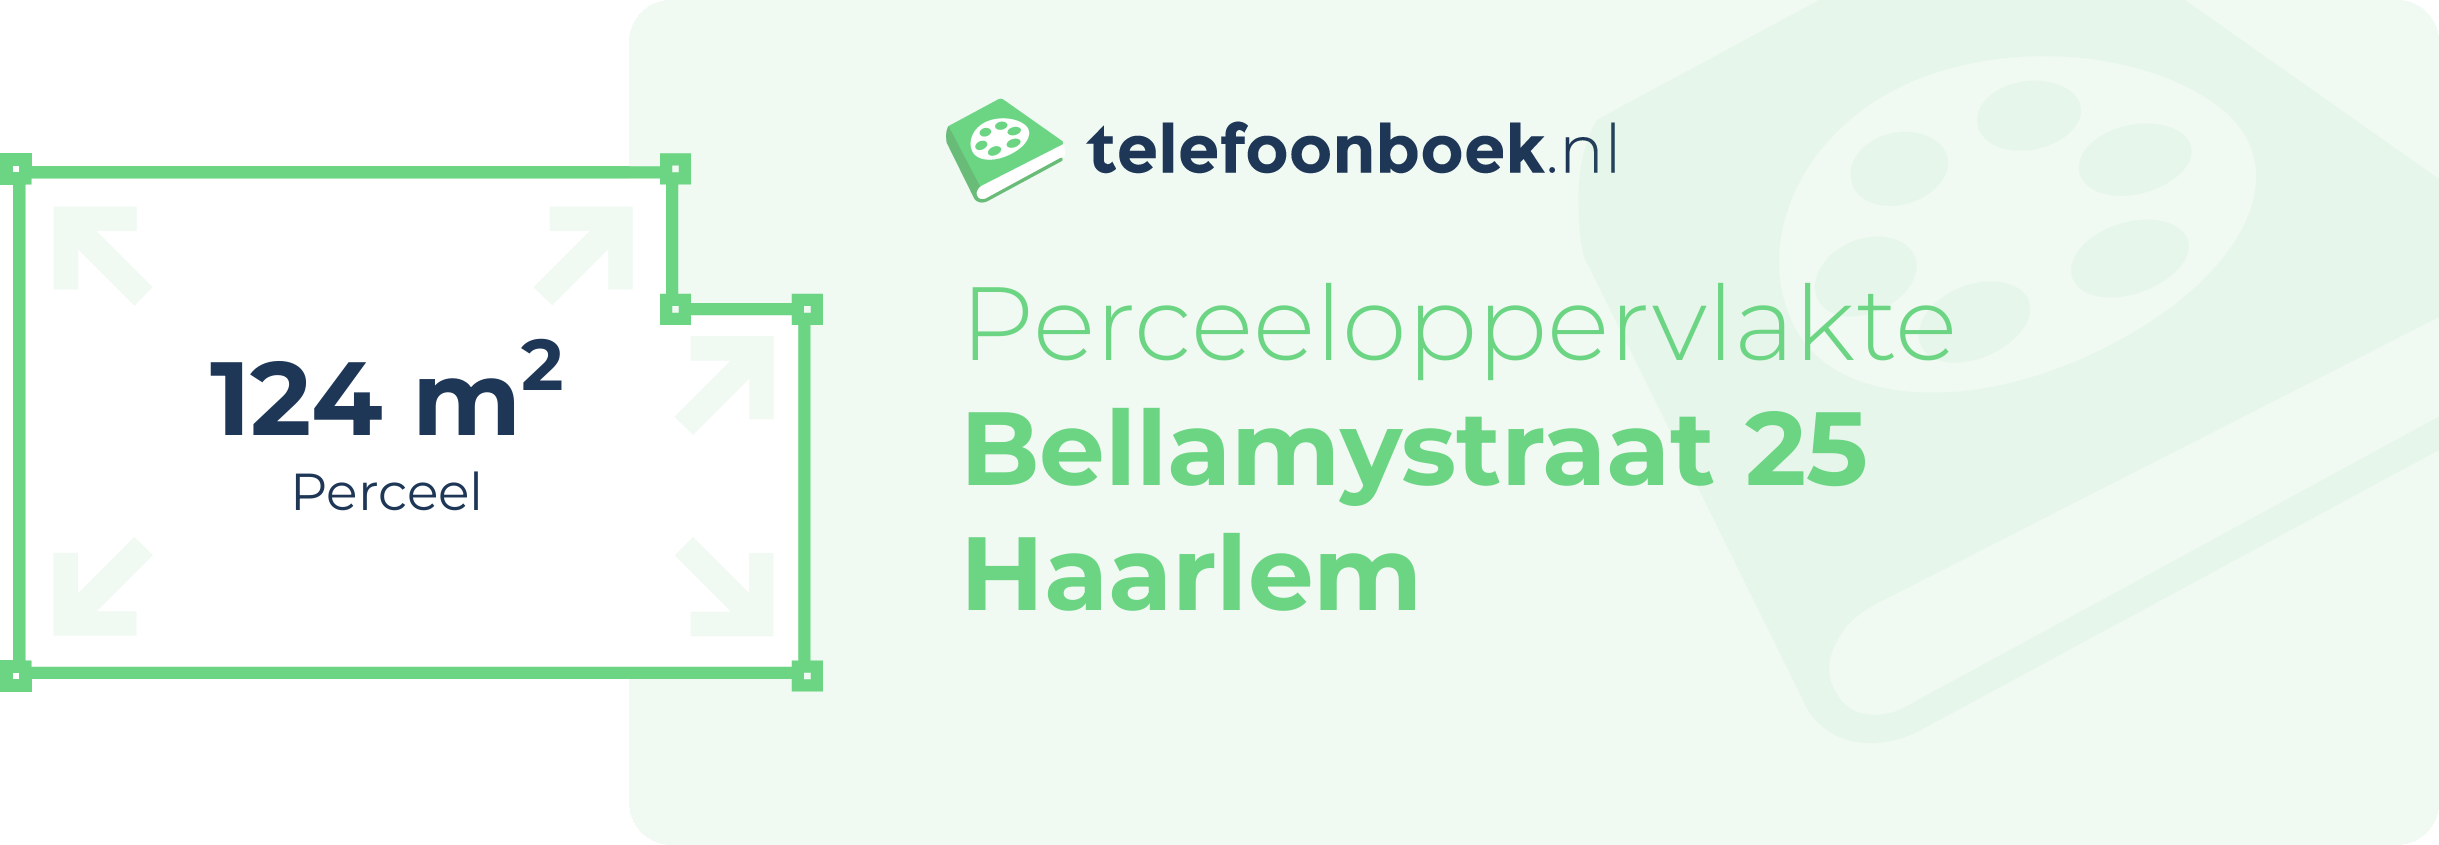 Perceeloppervlakte Bellamystraat 25 Haarlem